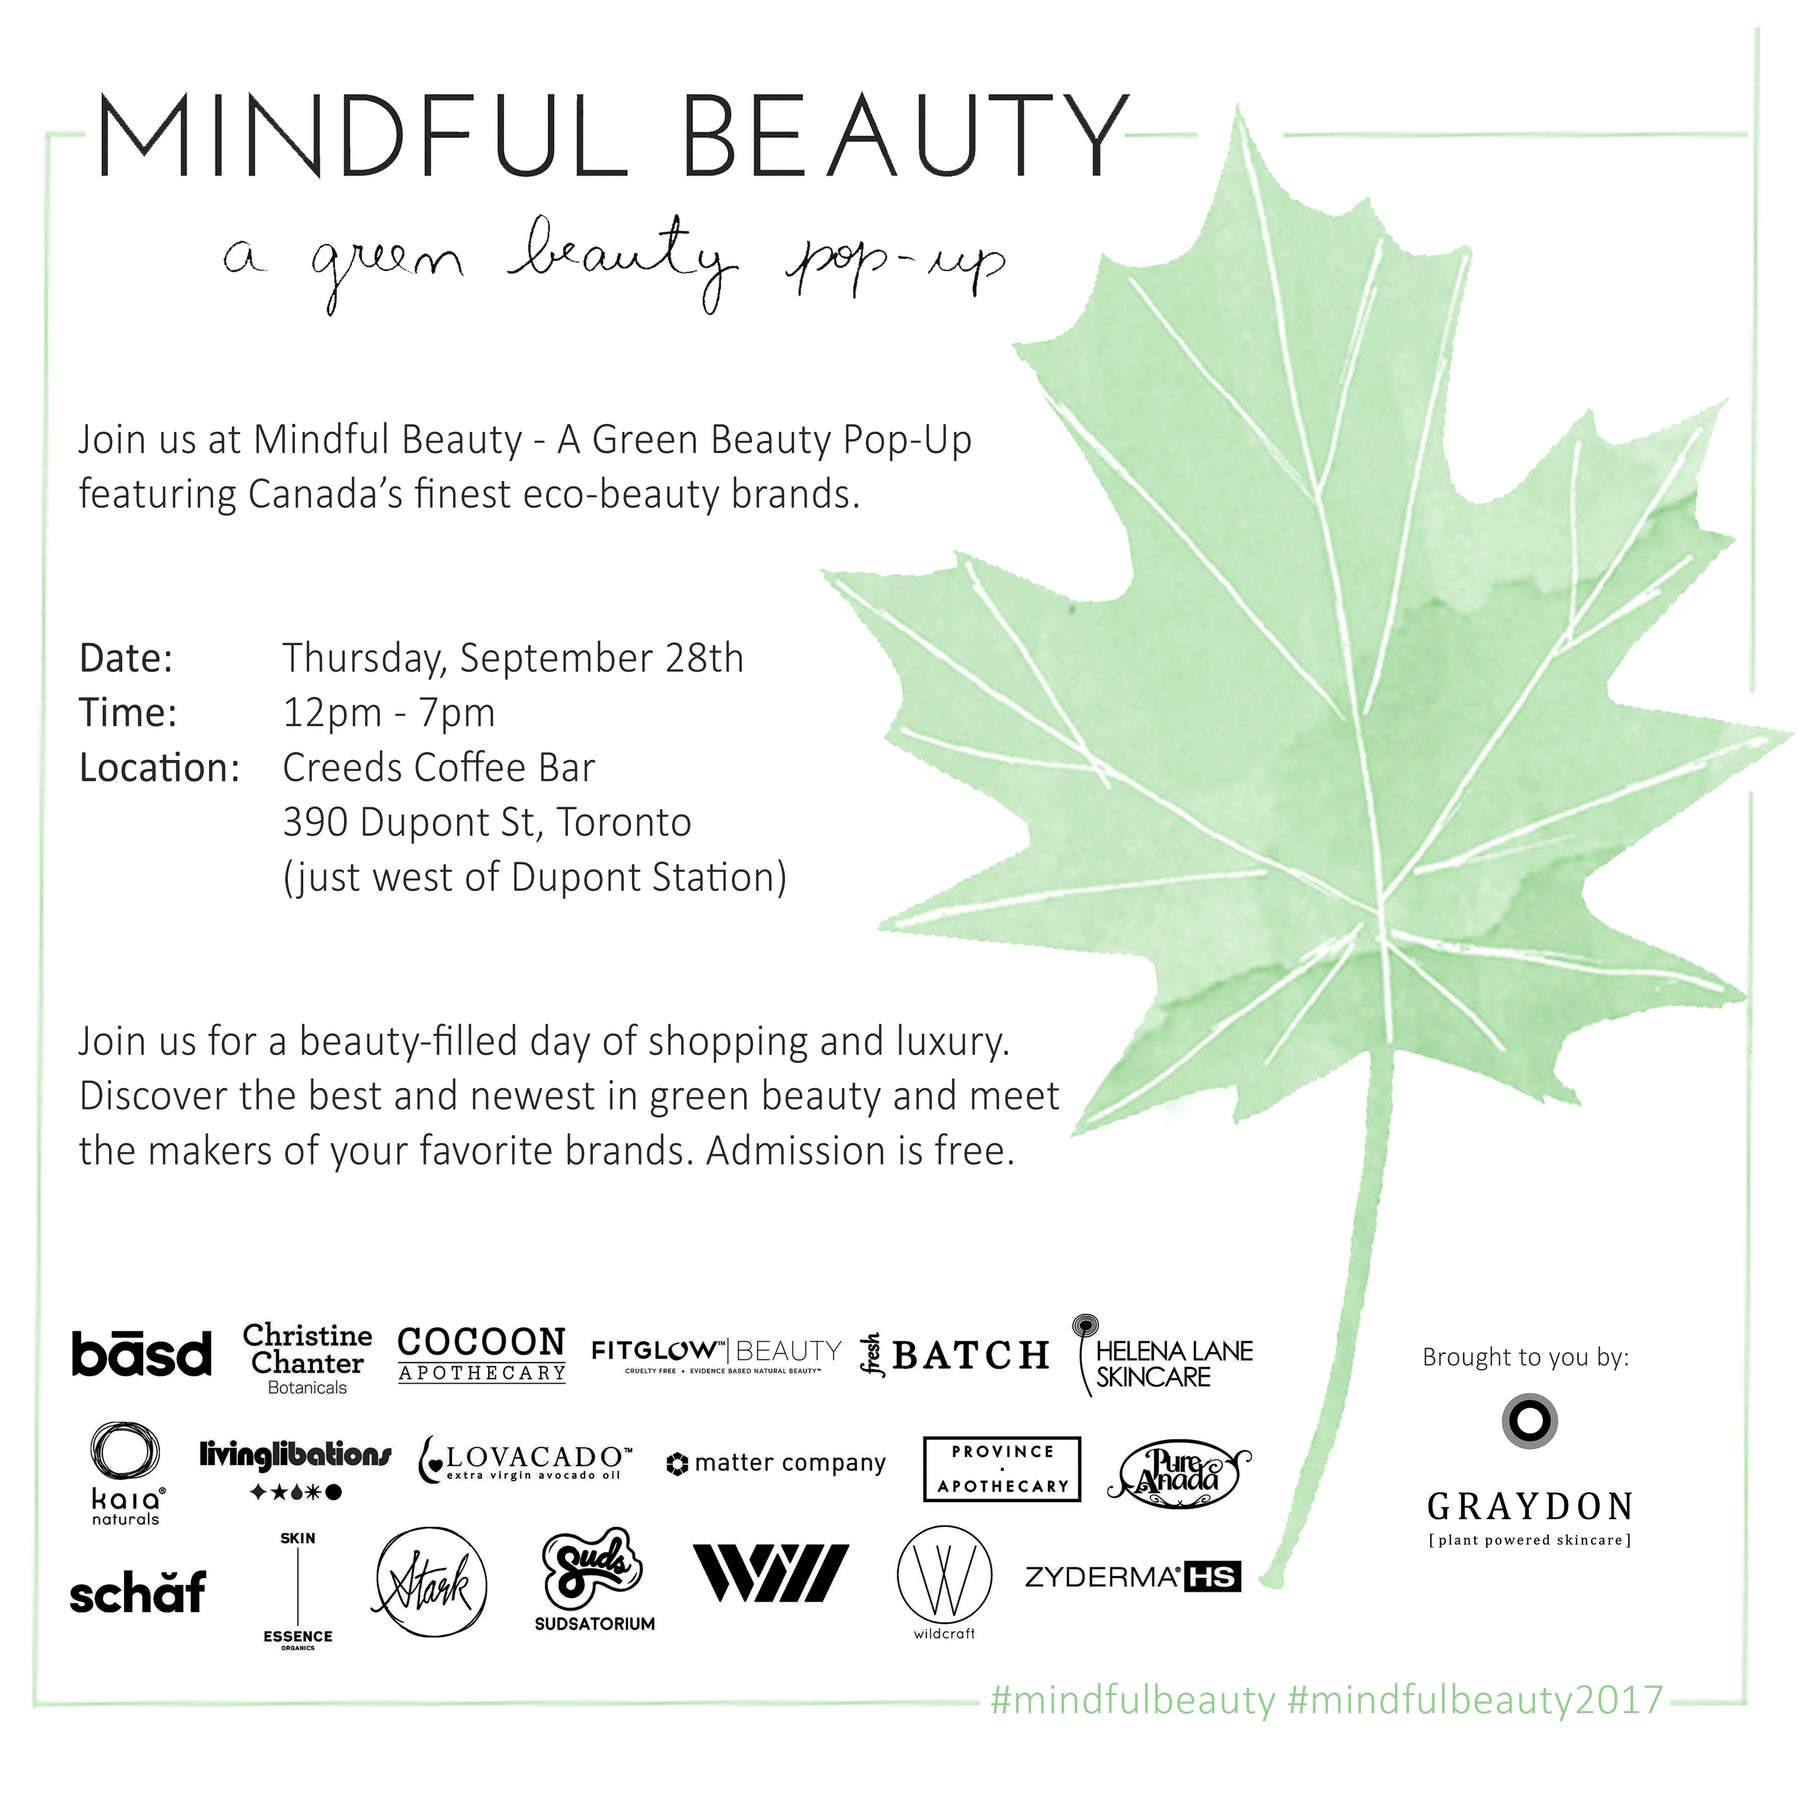 Mindful Beauty - A Green Beauty Pop-Up